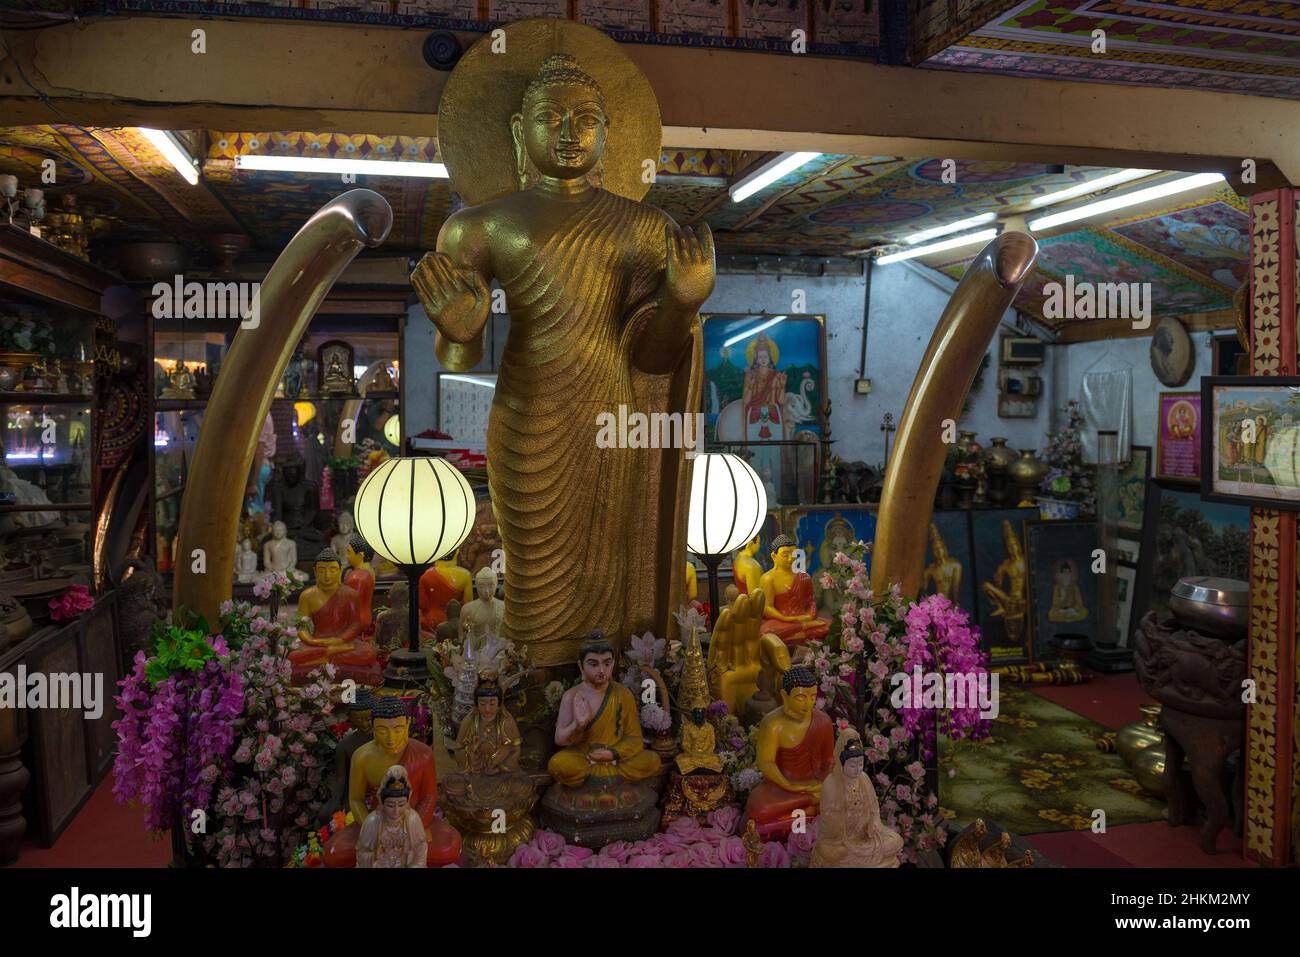 COLOMBO, SRI LANKA - FEBRUARY 22, 2020: Ancient sculpture of standing Buddha in one of the premises of Gangaramaya Temple Stock Photo